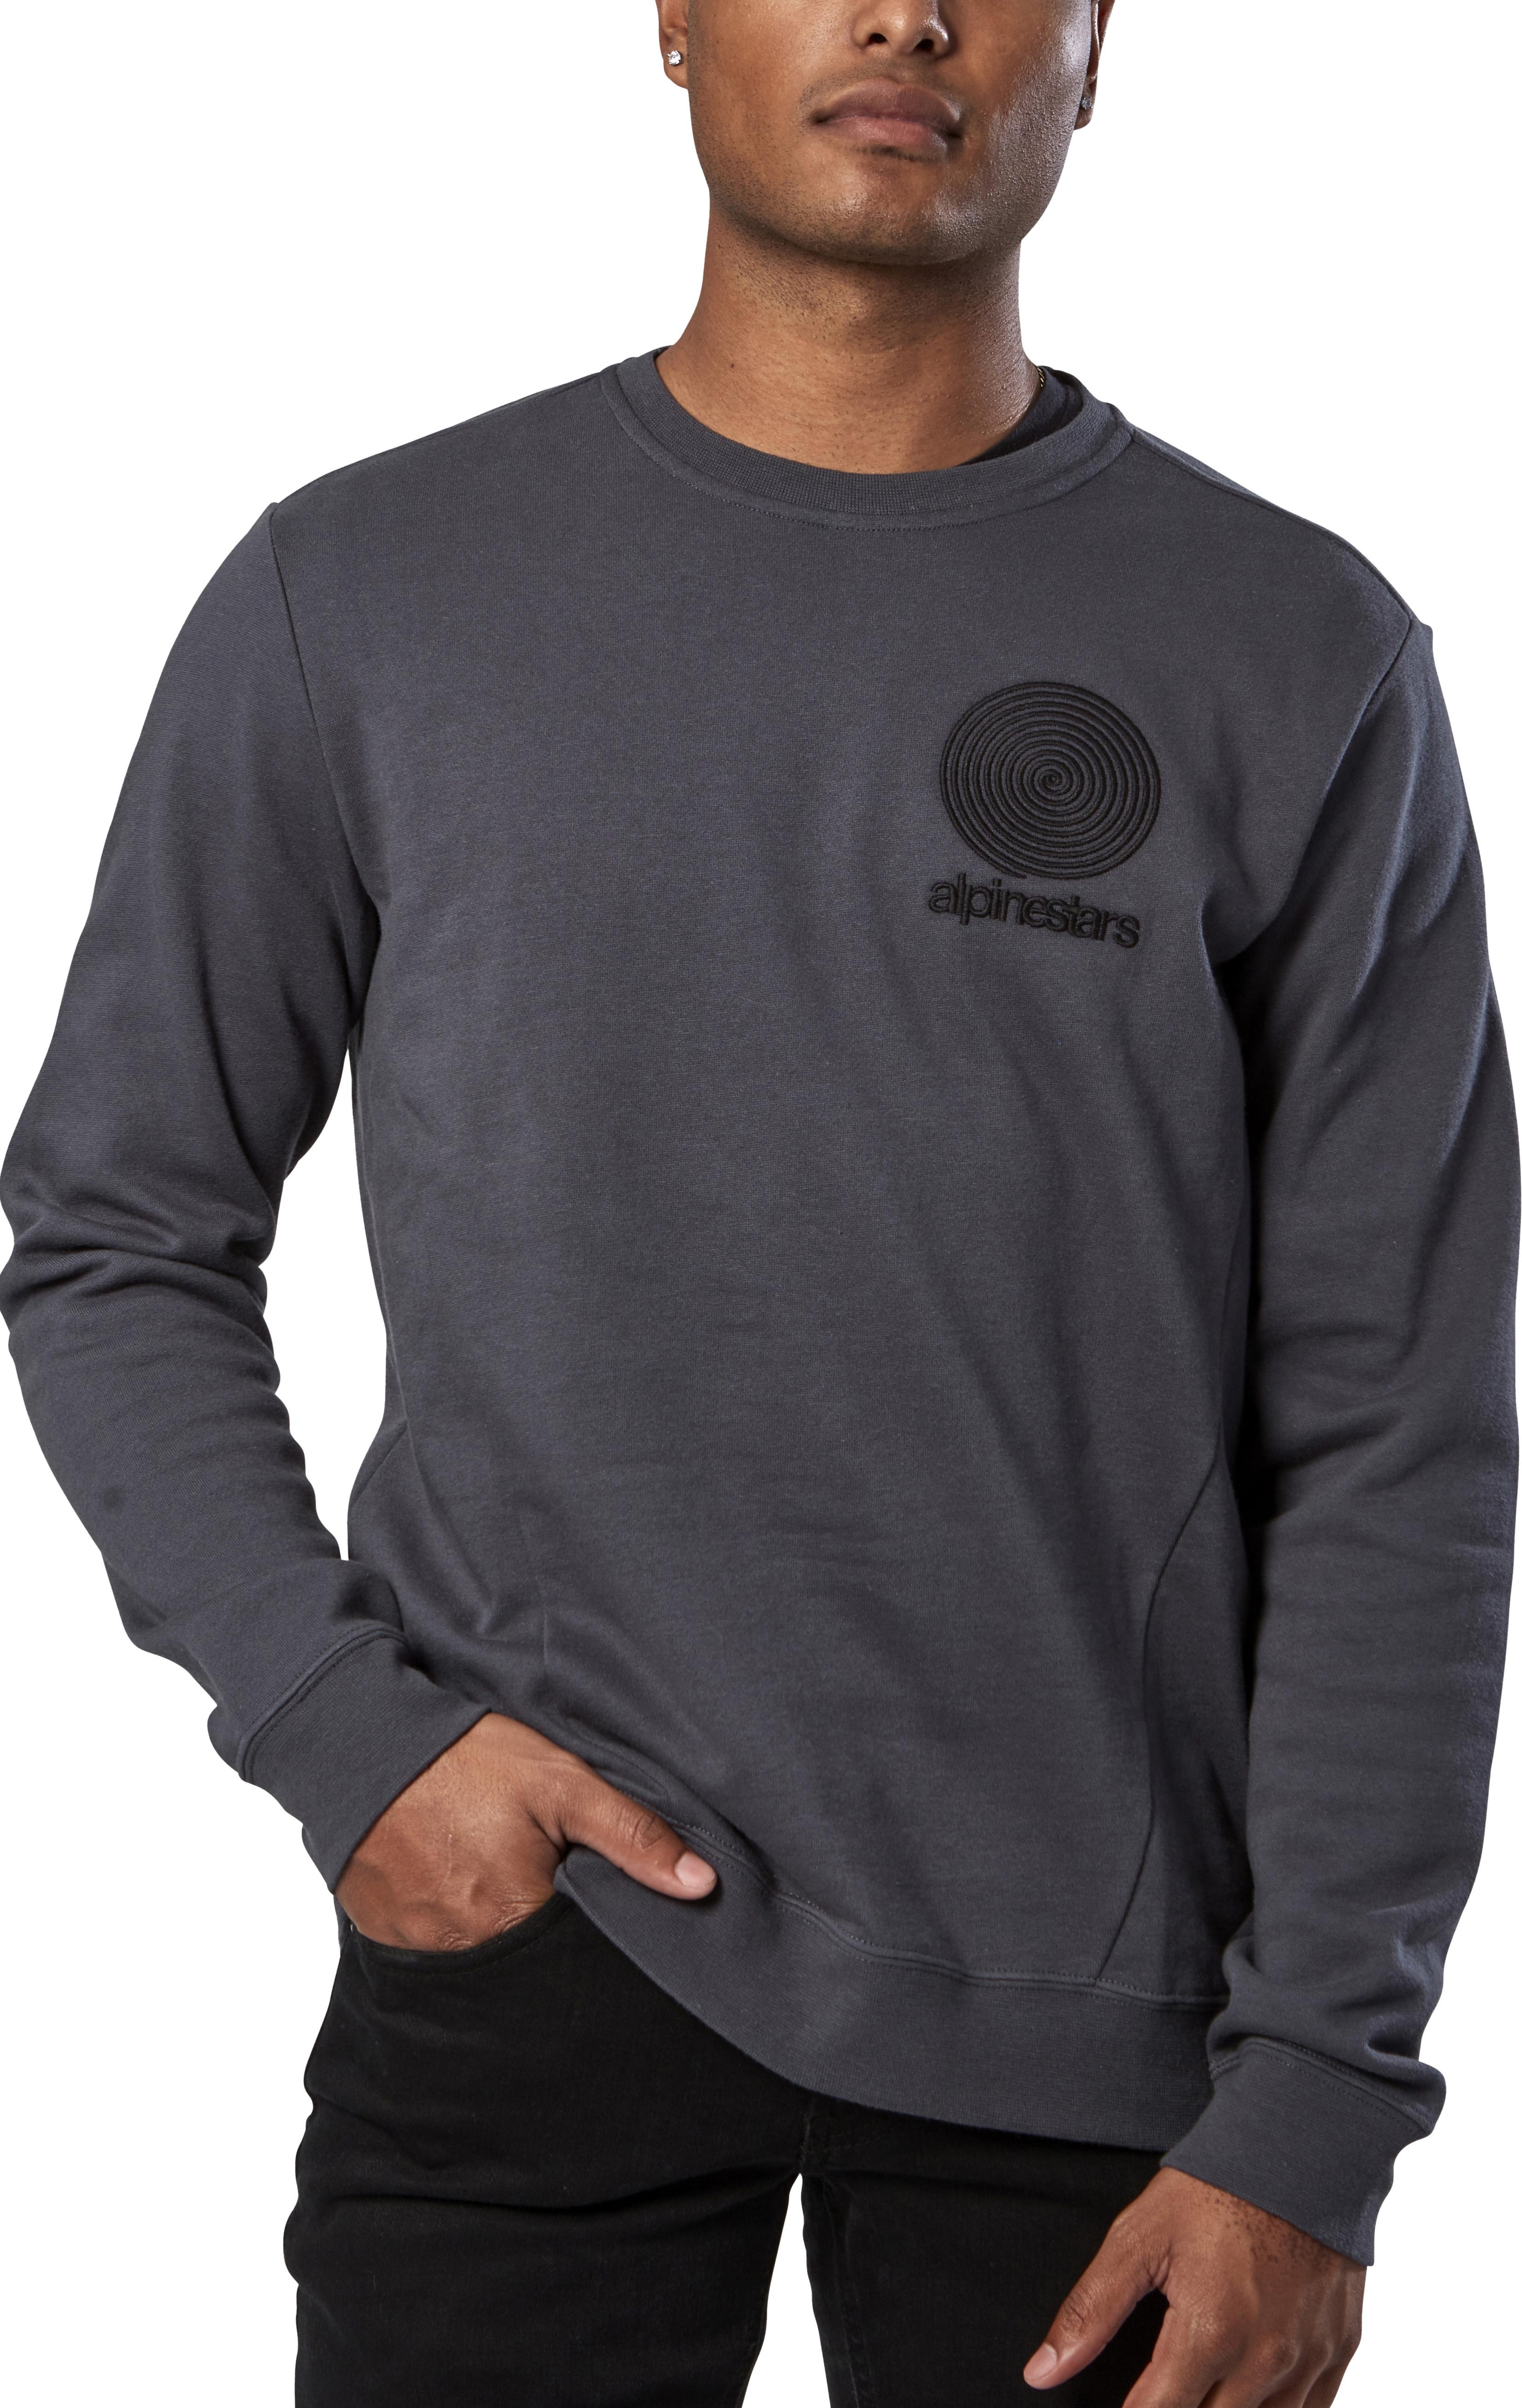 Alpinestars Spiral Crew Fleece Sweatshirt - Charcoal